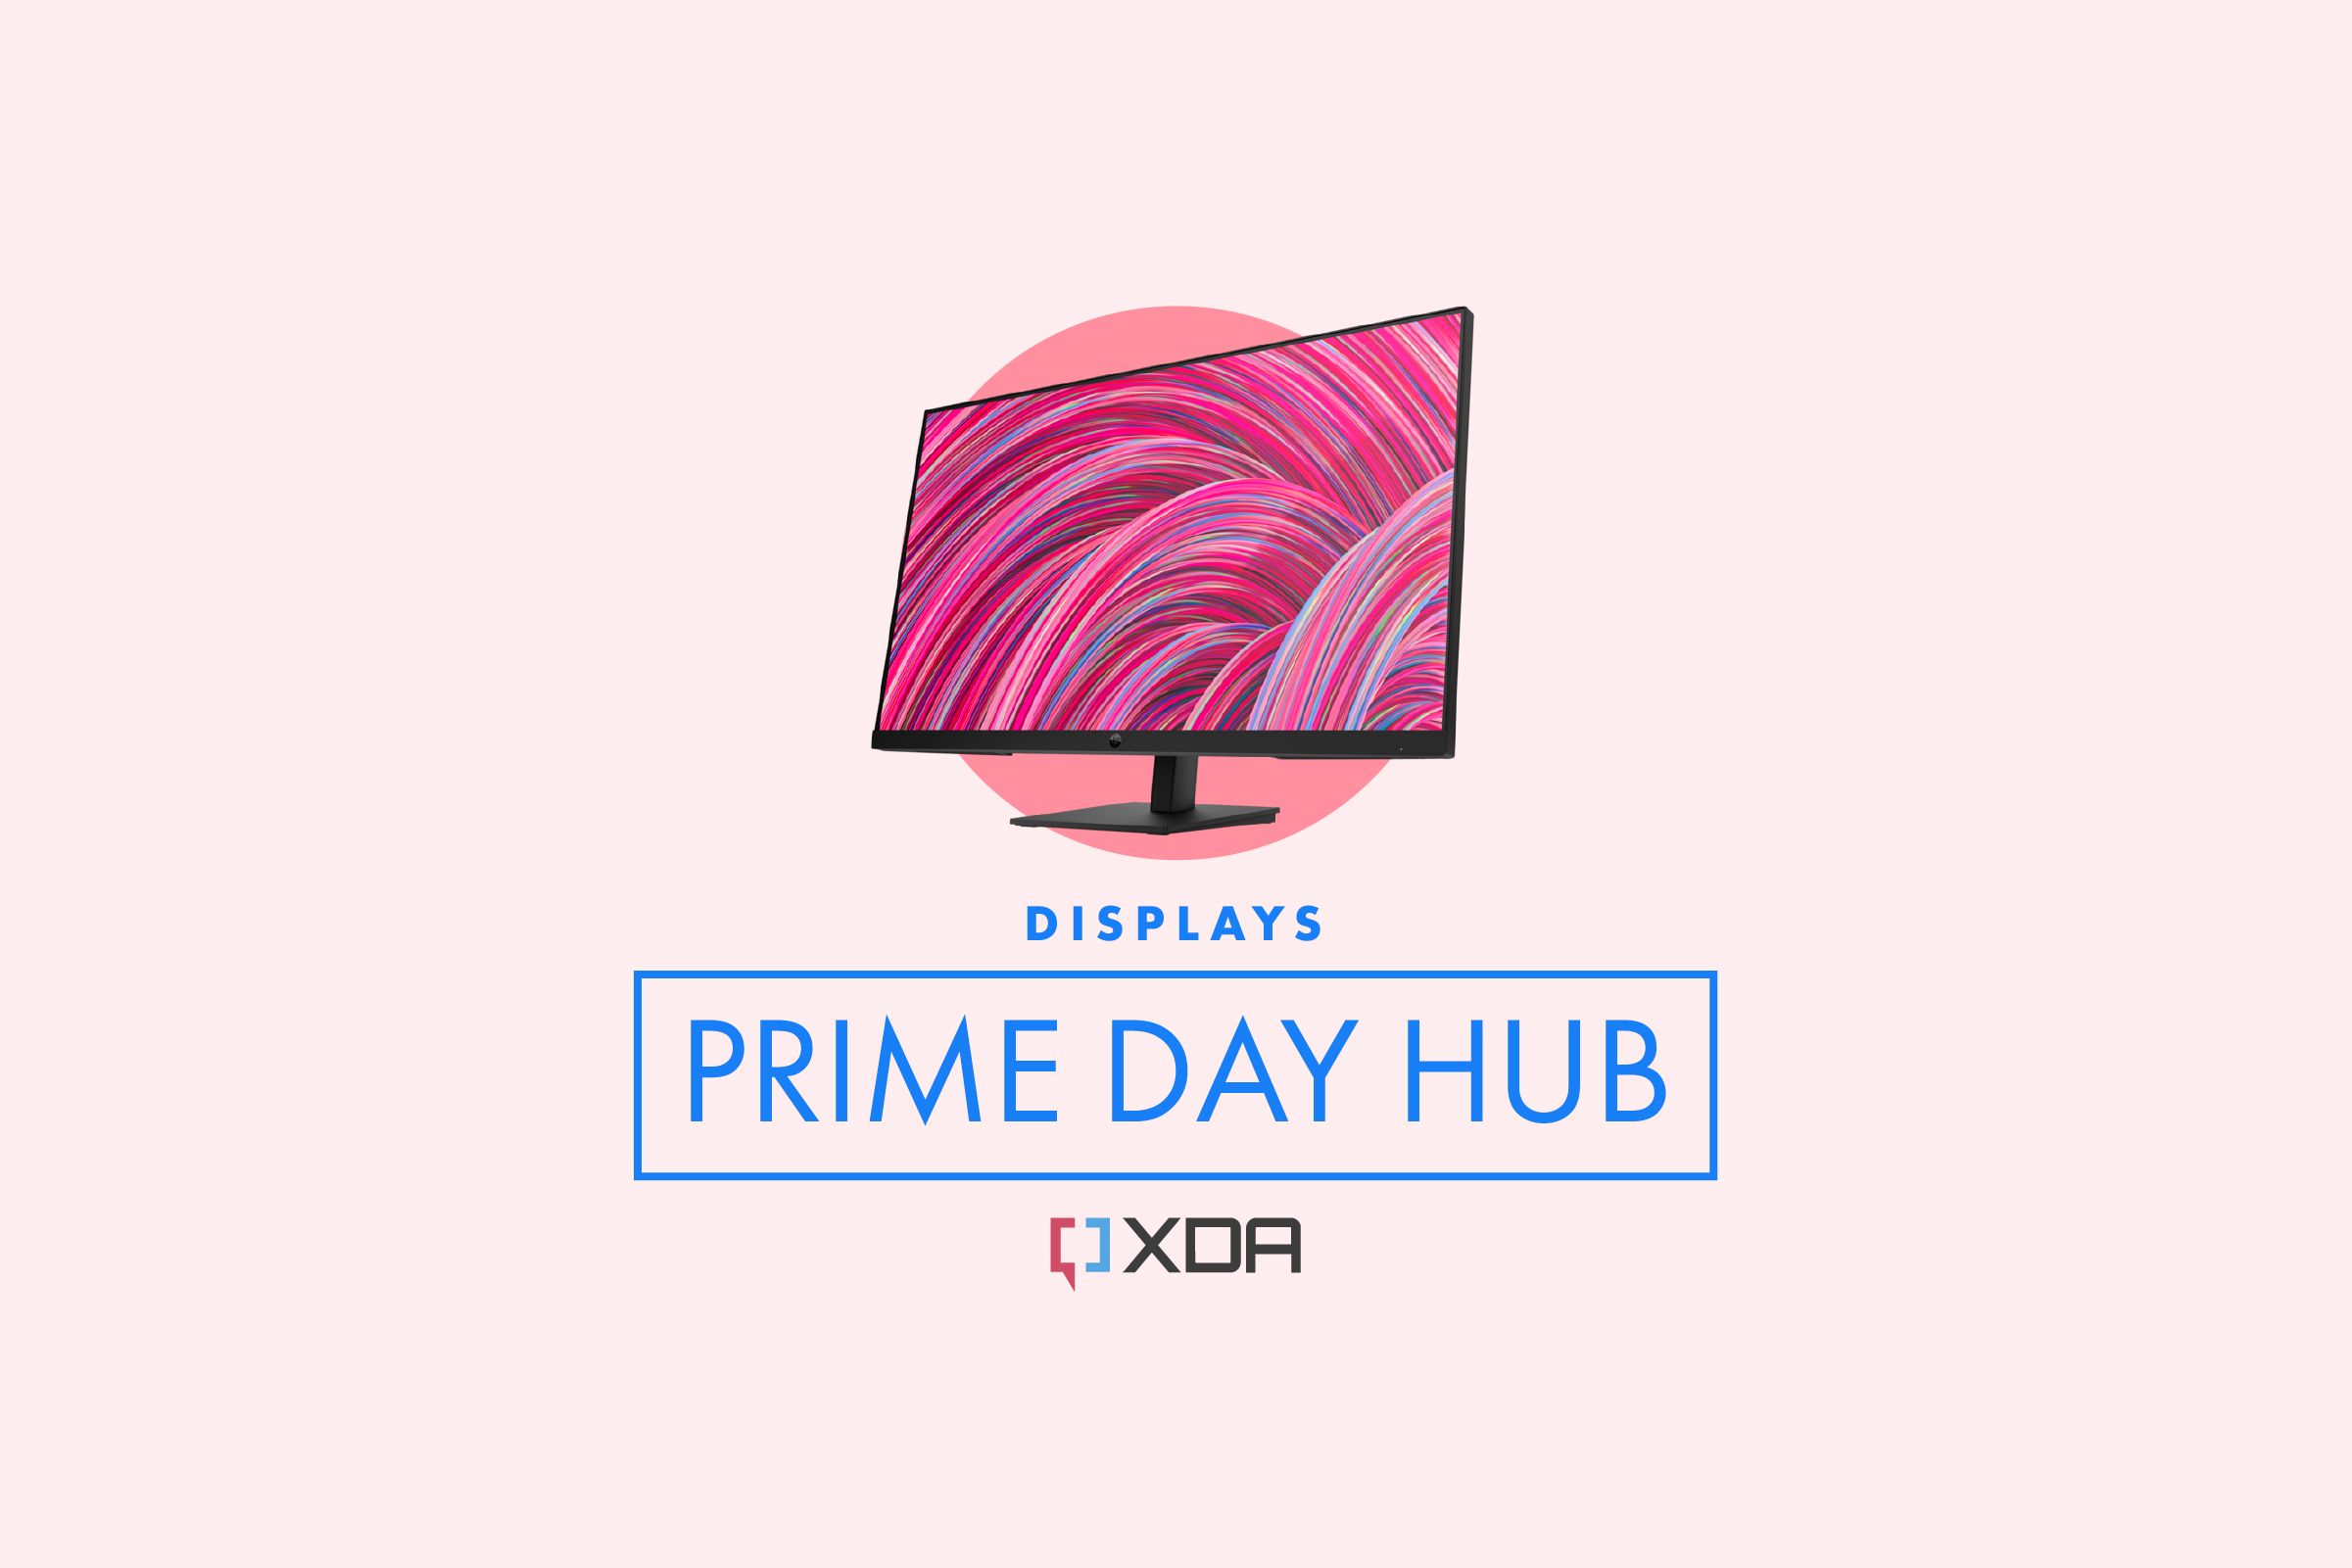 Displays Prime Day hub